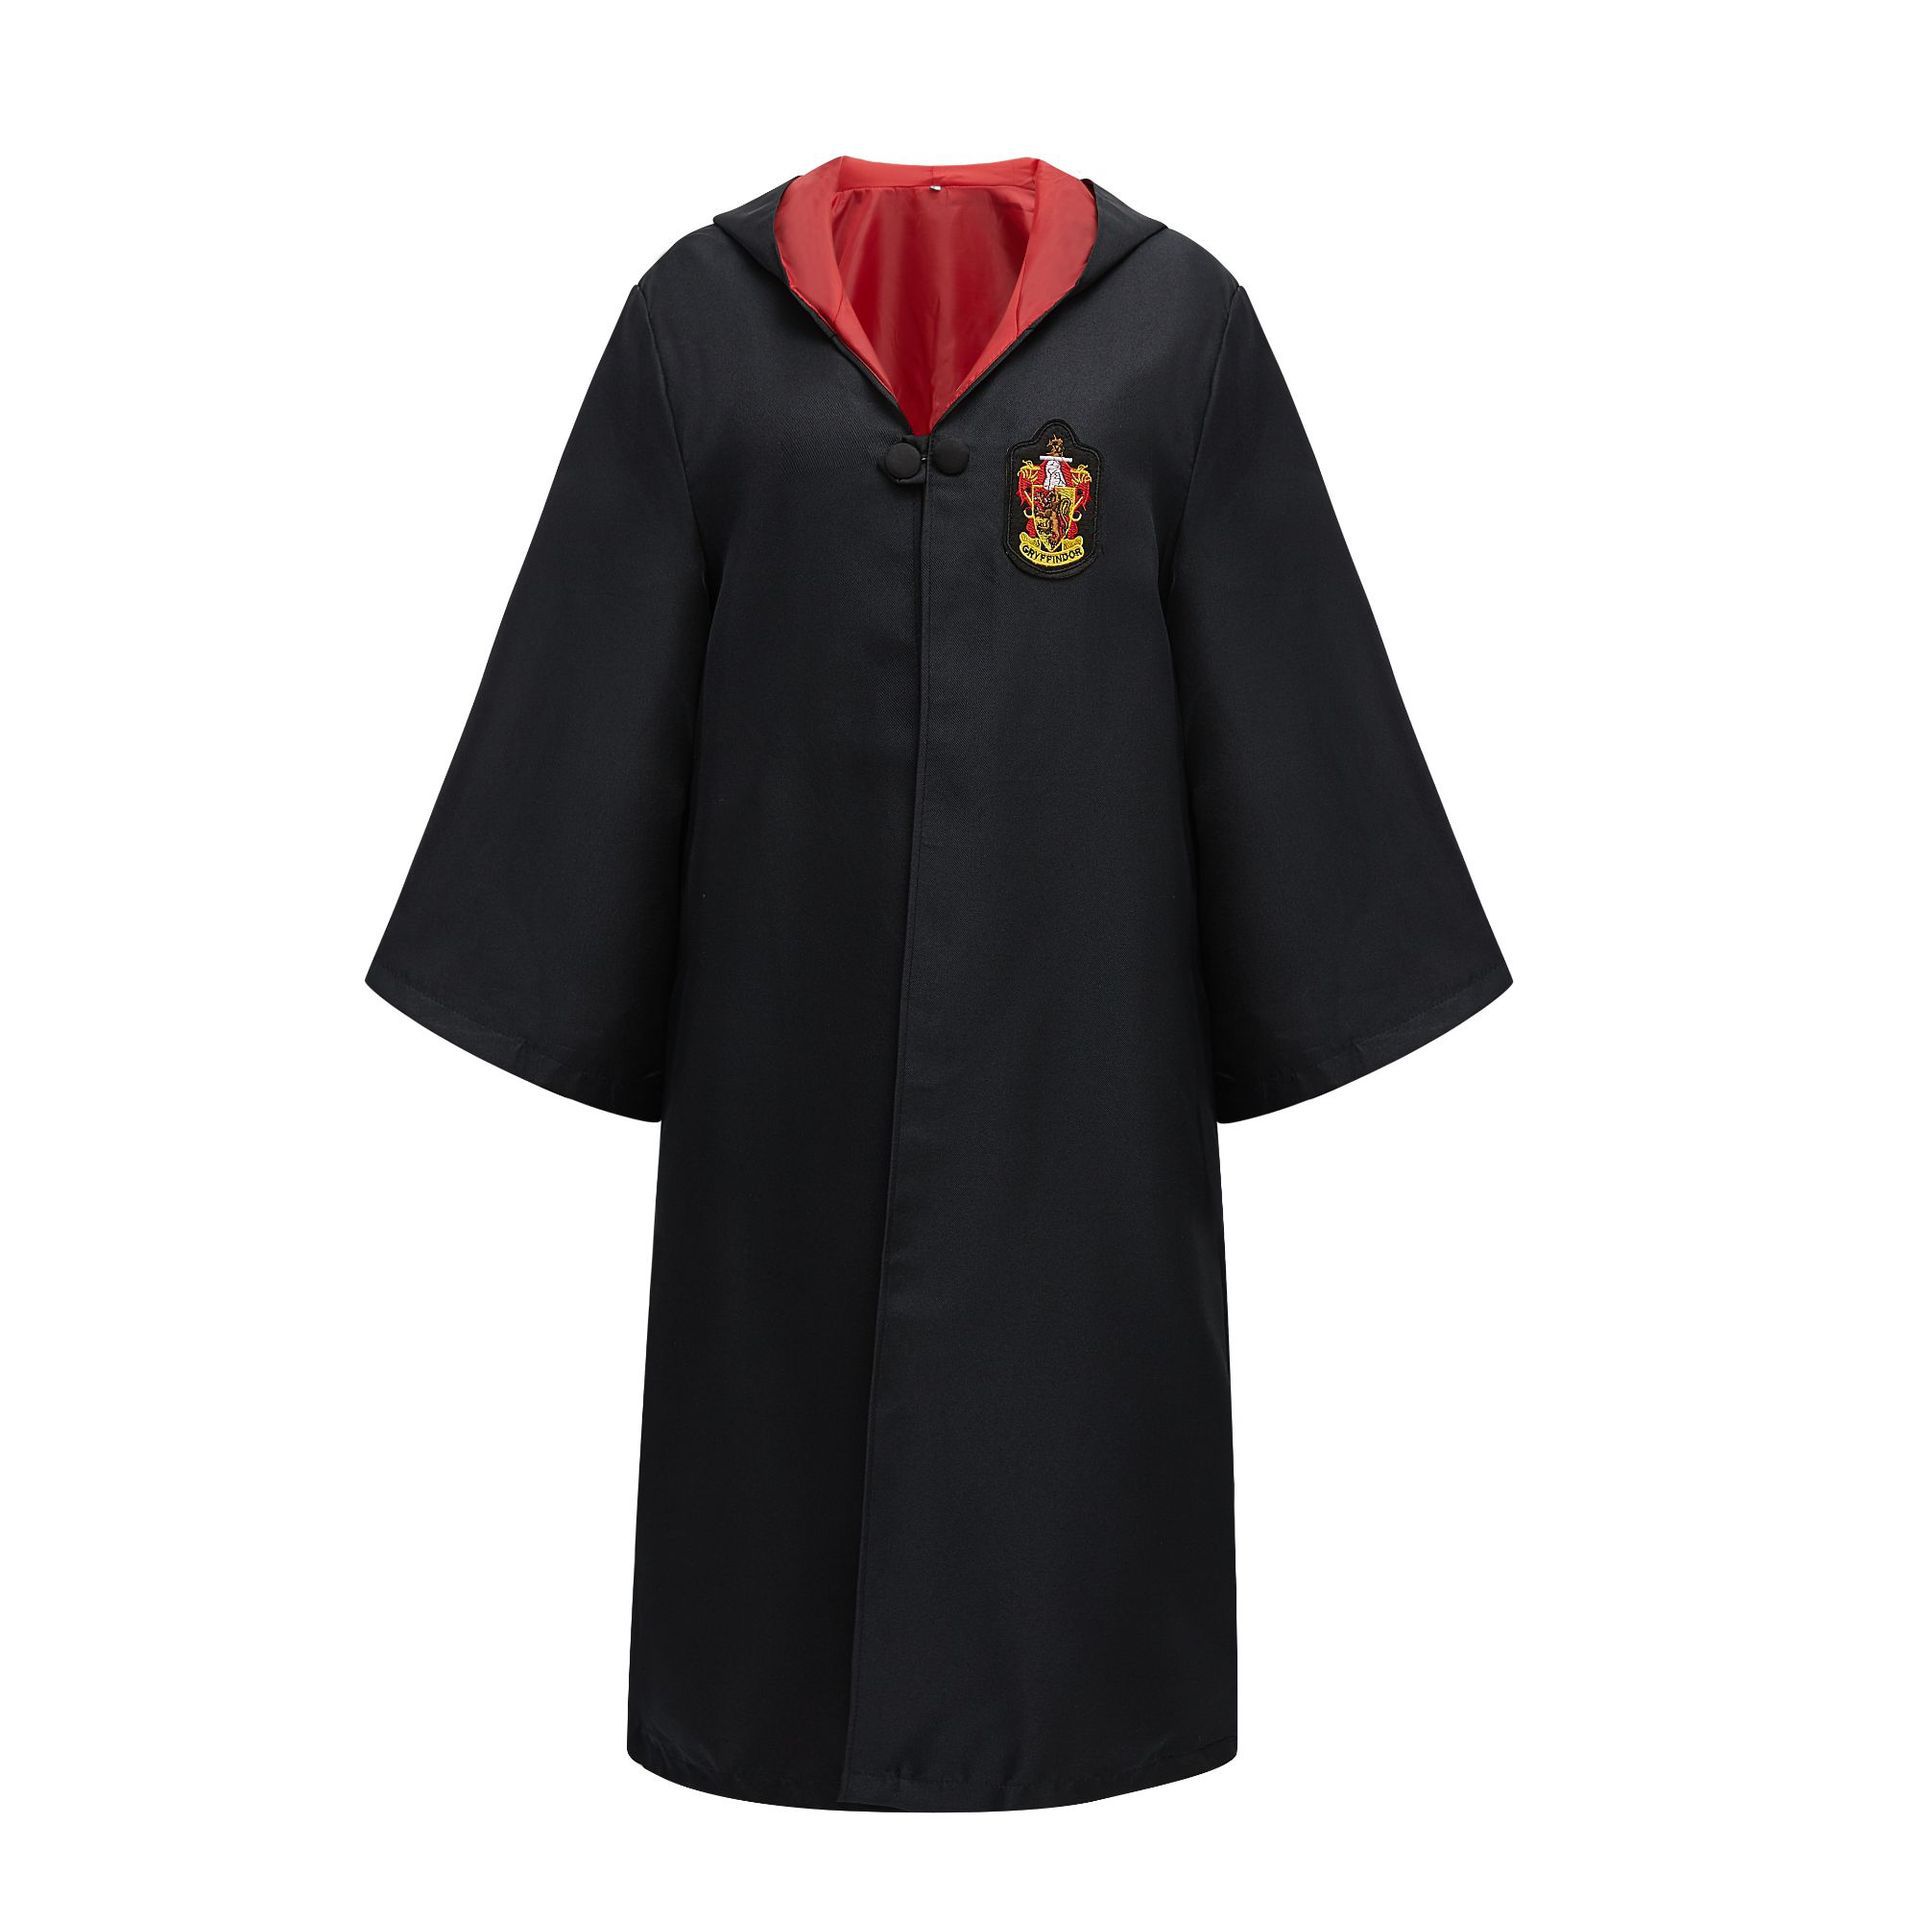 Harry Magic Robe Wizard Robe Cosplay Costume Children's Cloak Cloak PROTONIC Costume Halloween Clothes